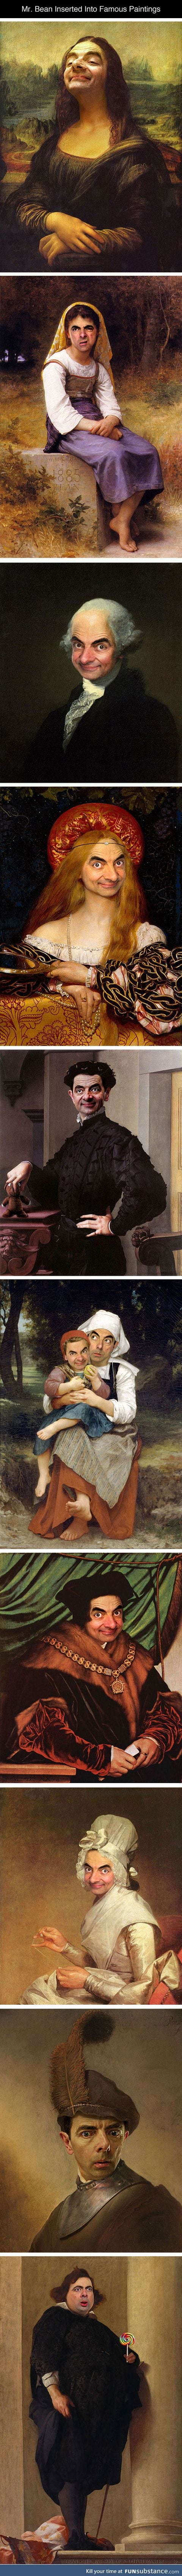 Mr. Bean art